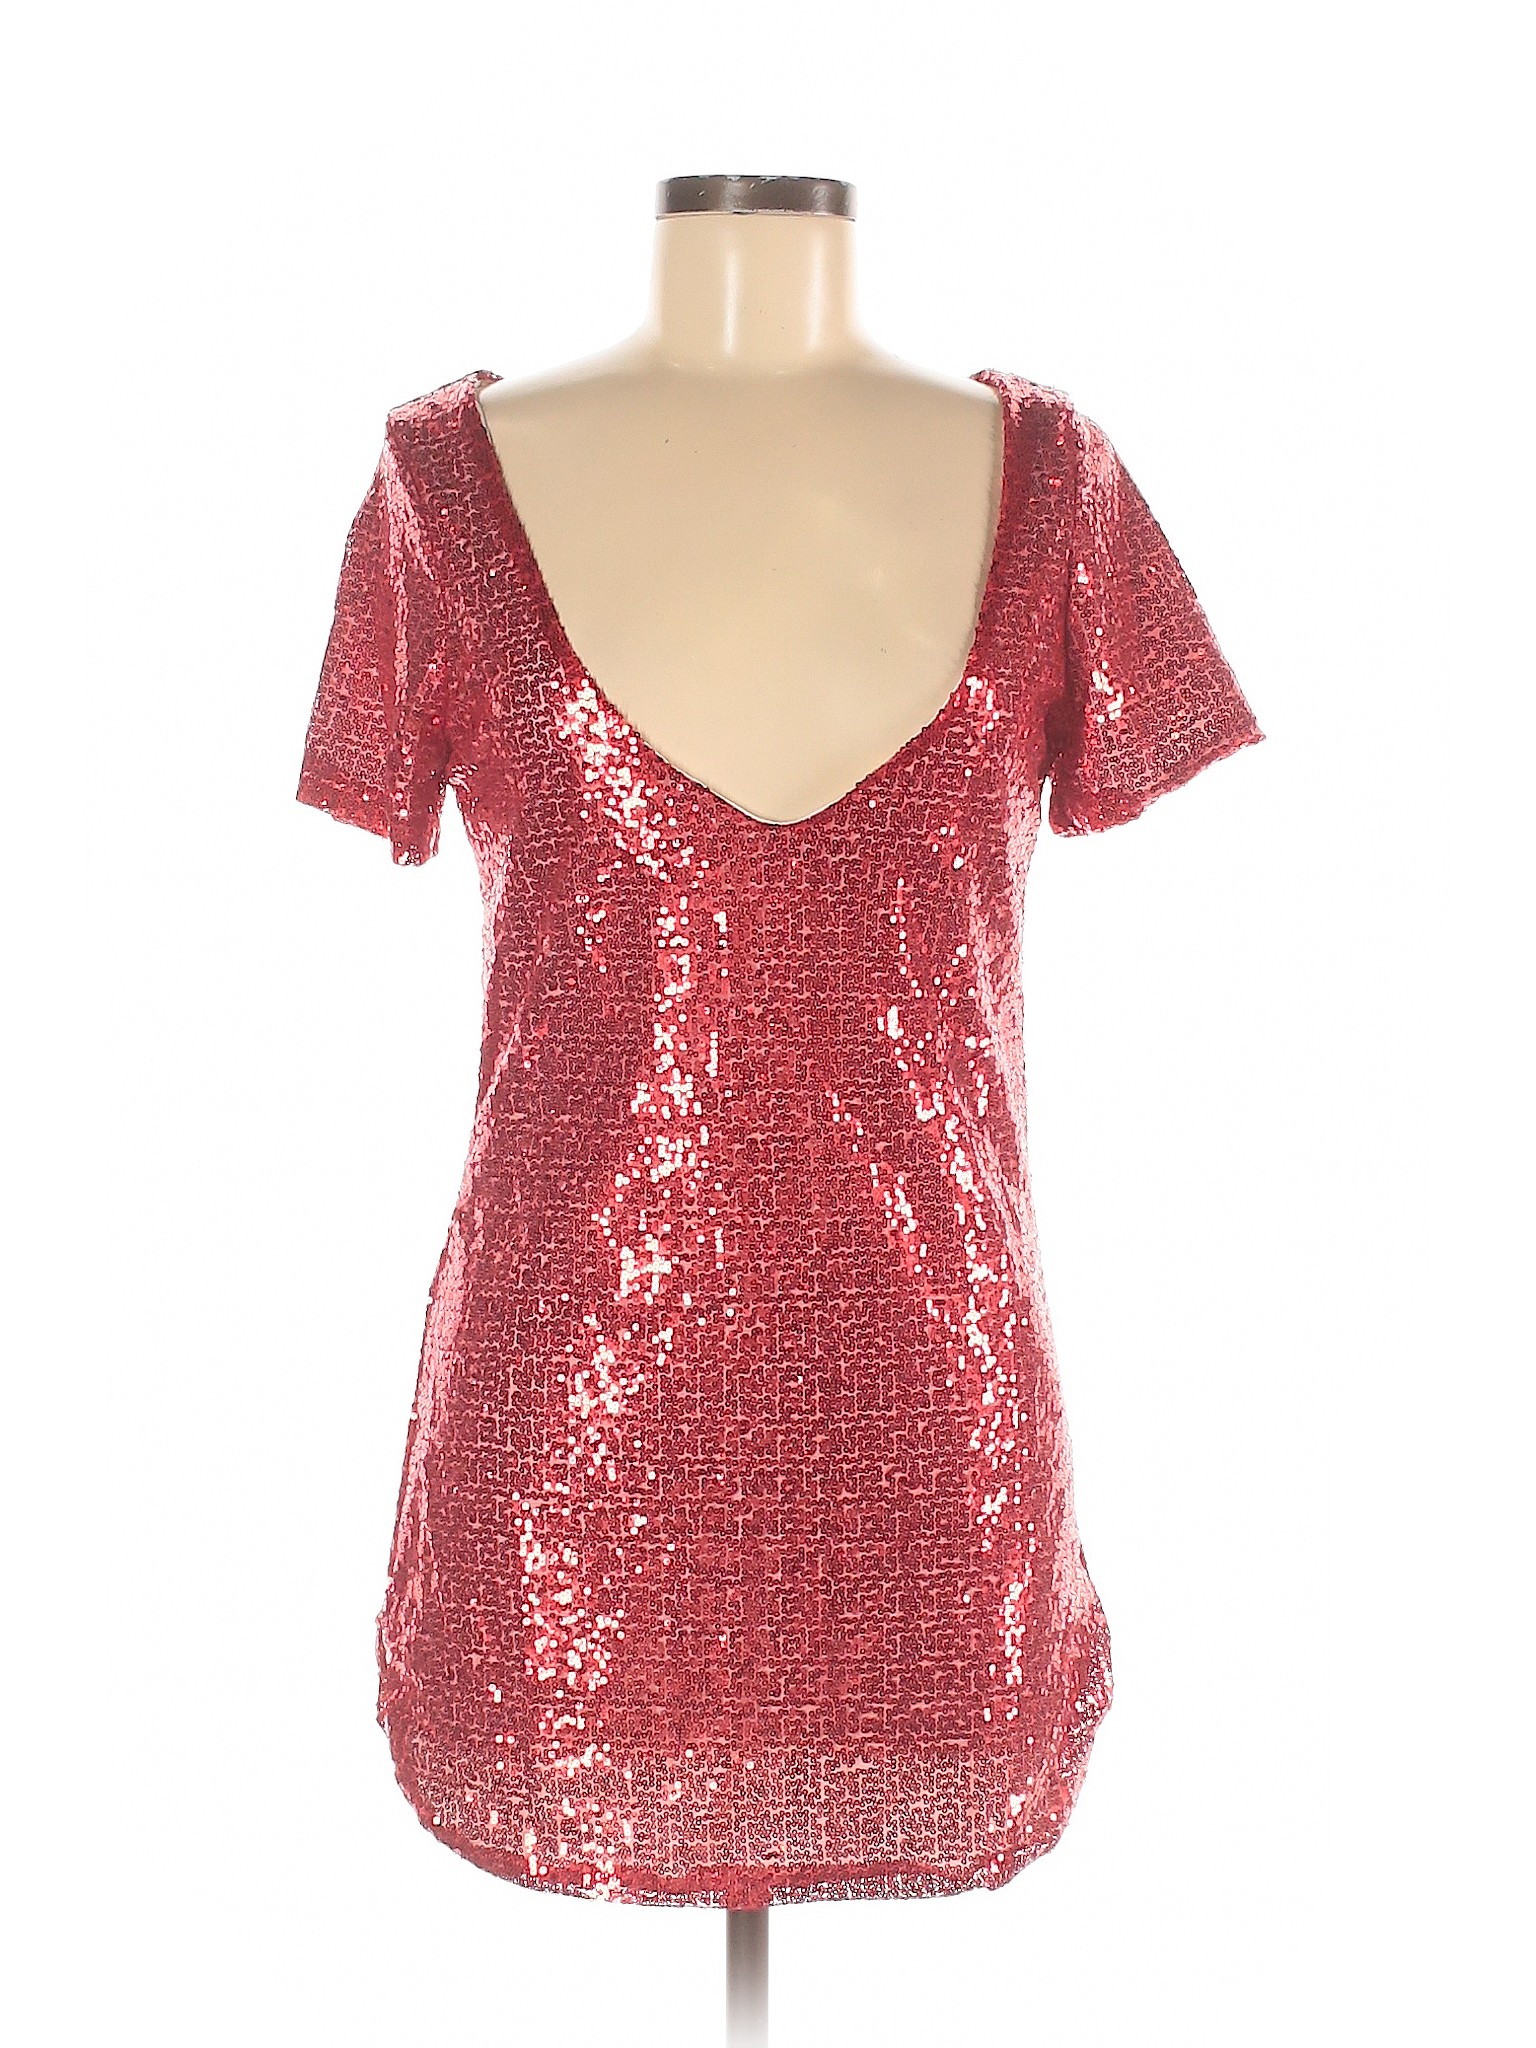 Assorted Brands Women Red Cocktail Dress M | eBay